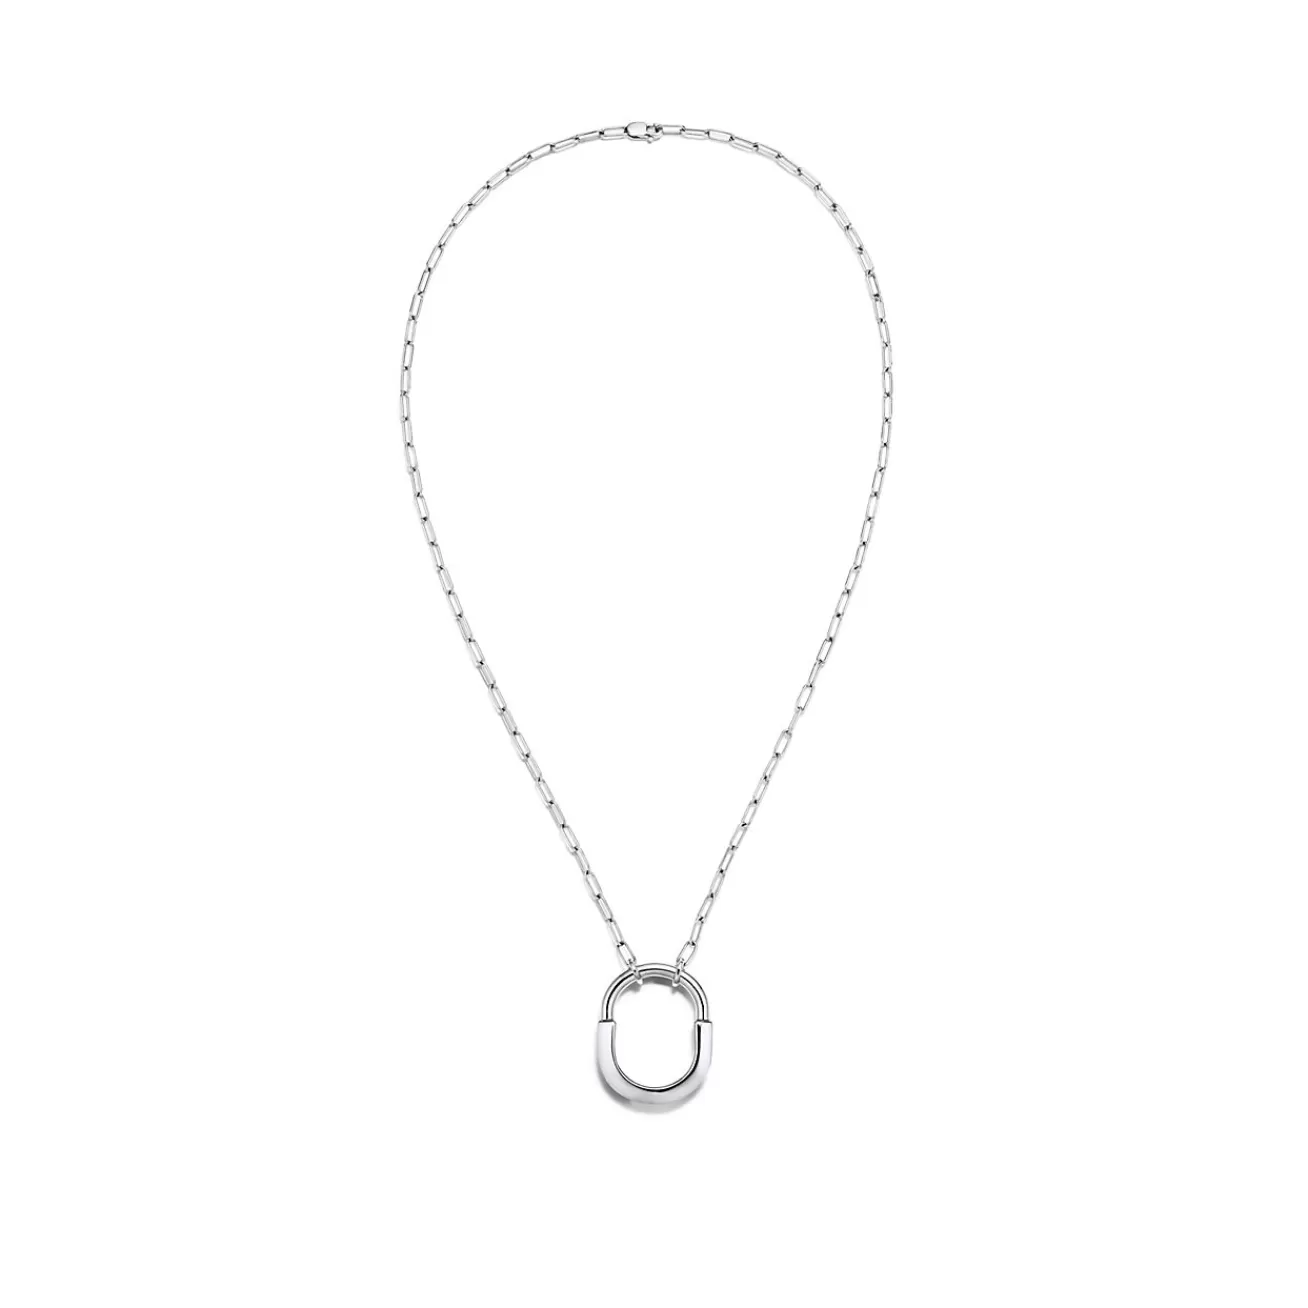 Tiffany & Co. Tiffany Lock Pendant in White Gold, Medium | ^ Necklaces & Pendants | Tiffany Lock